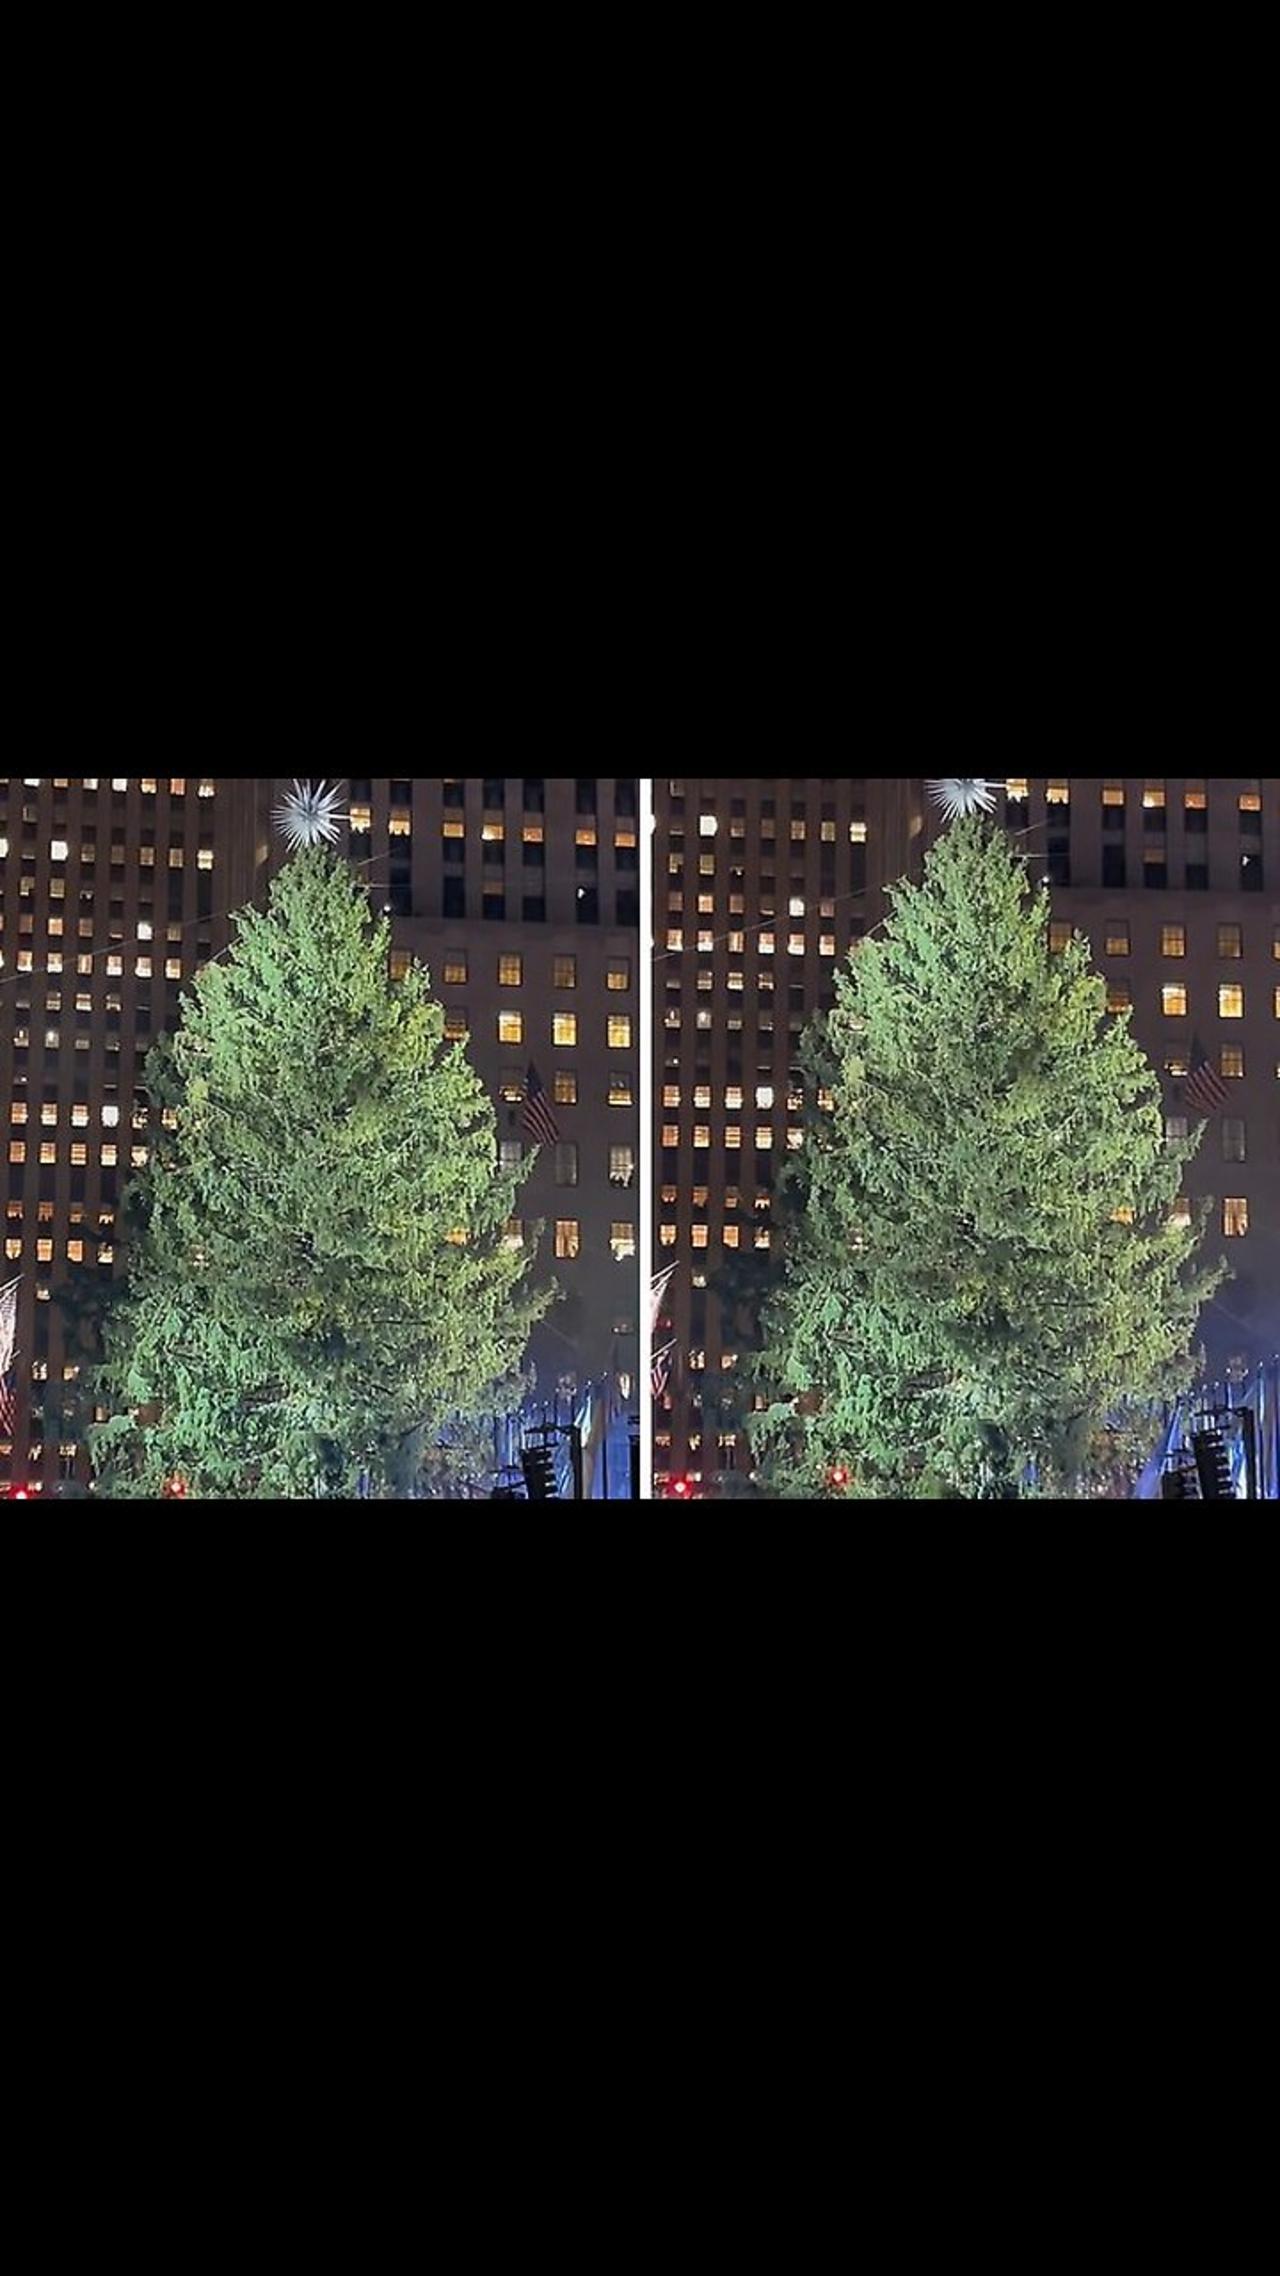 Rockefeller Center Christmas Tree Fail